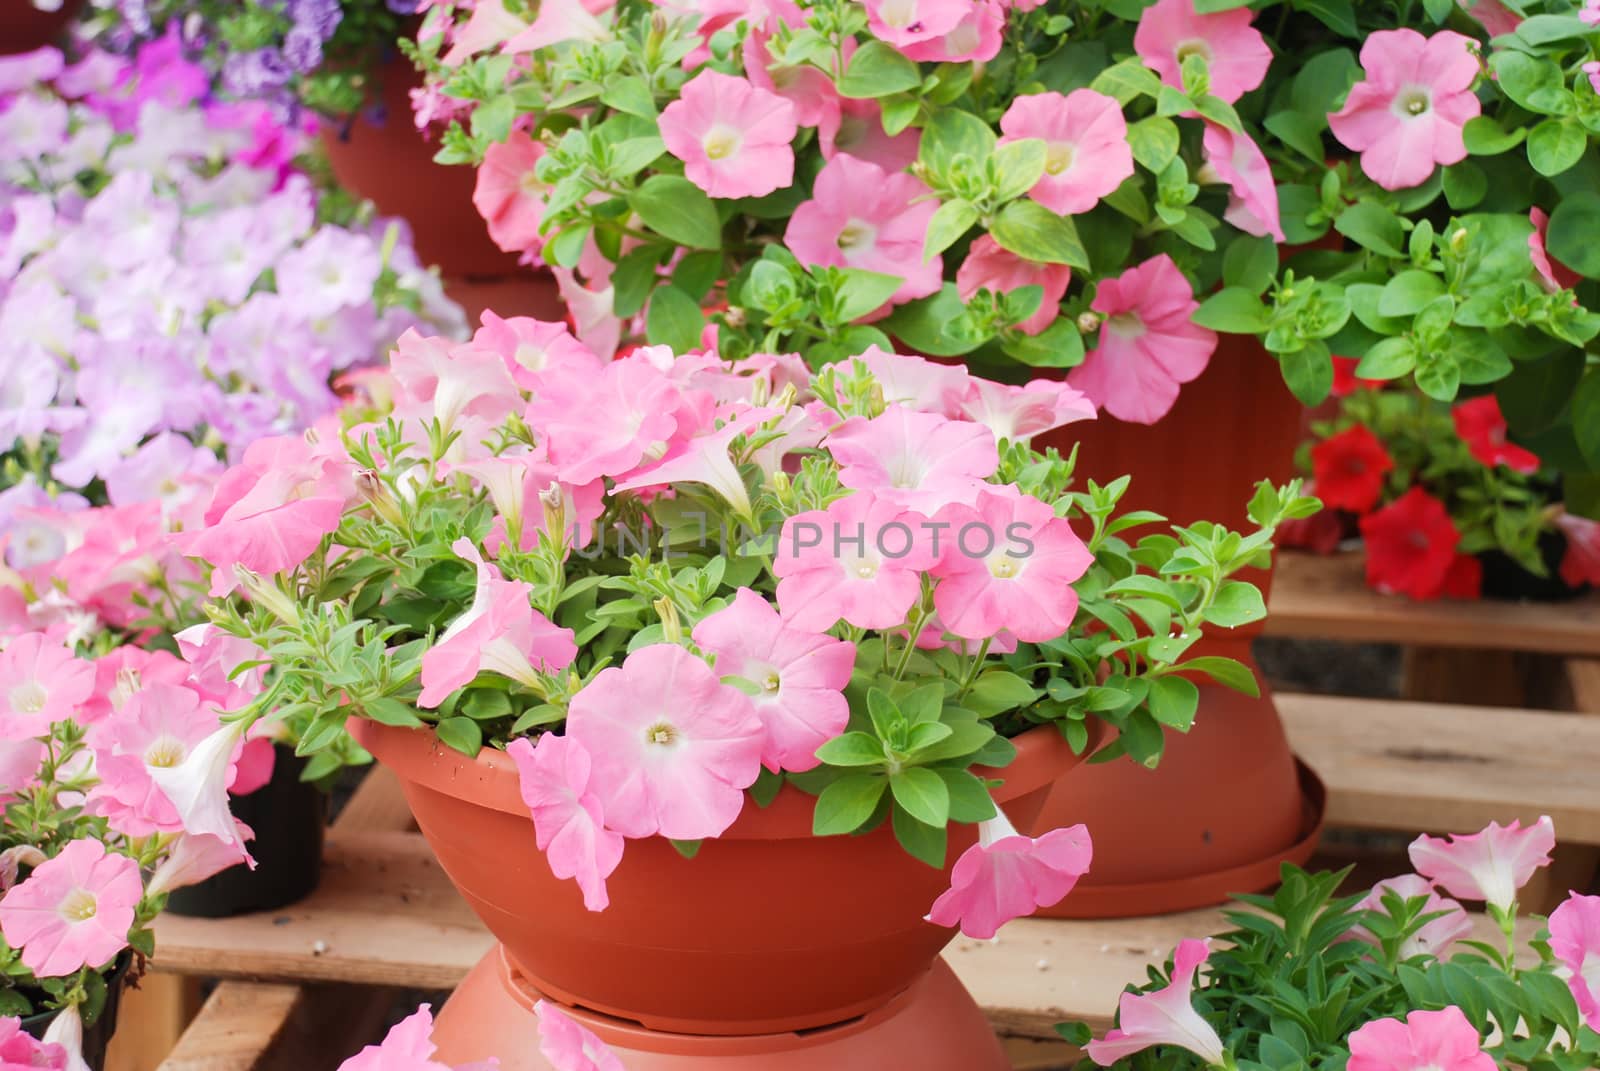 Petunia ,Petunias in the tray,Petunia in the pot, Mixed color petunia, pink shade 